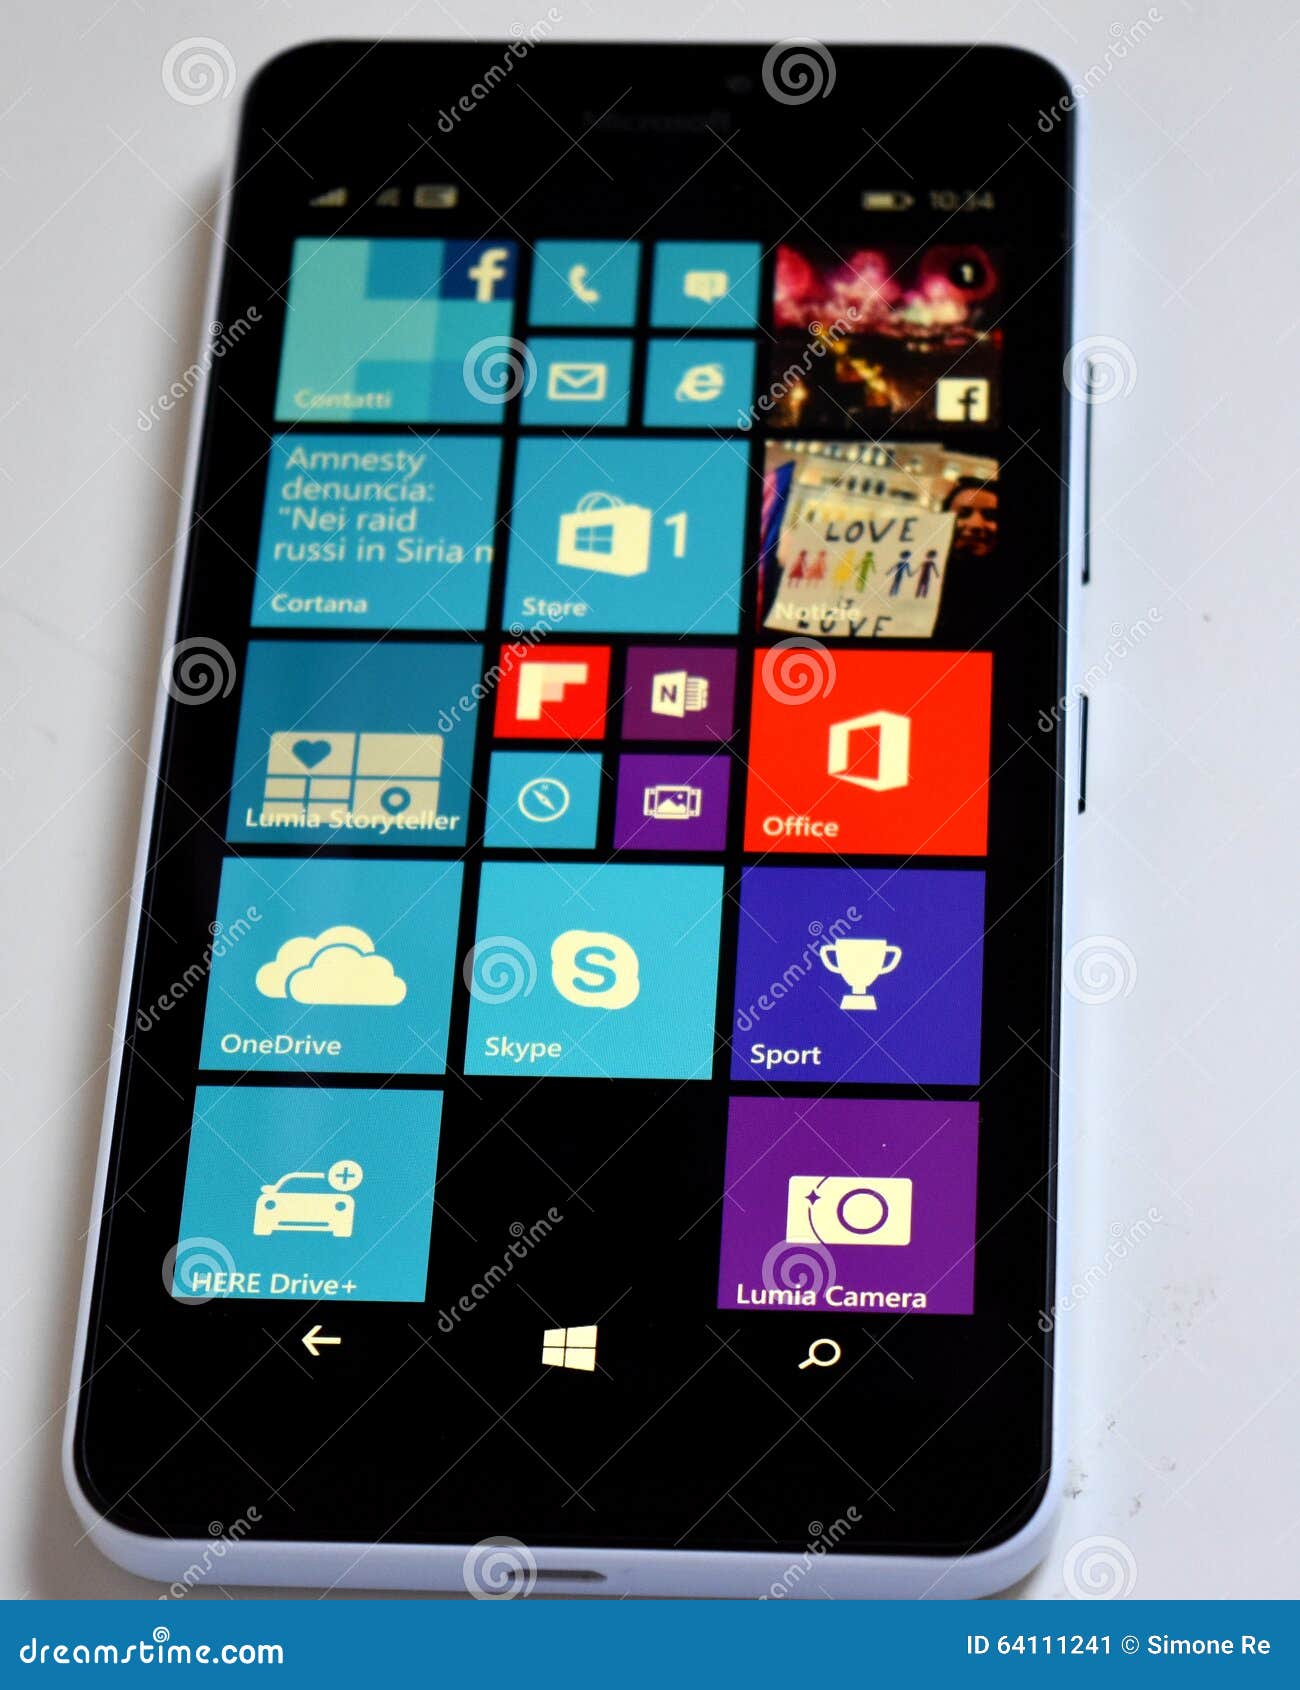 Windows Phone Background Image Download